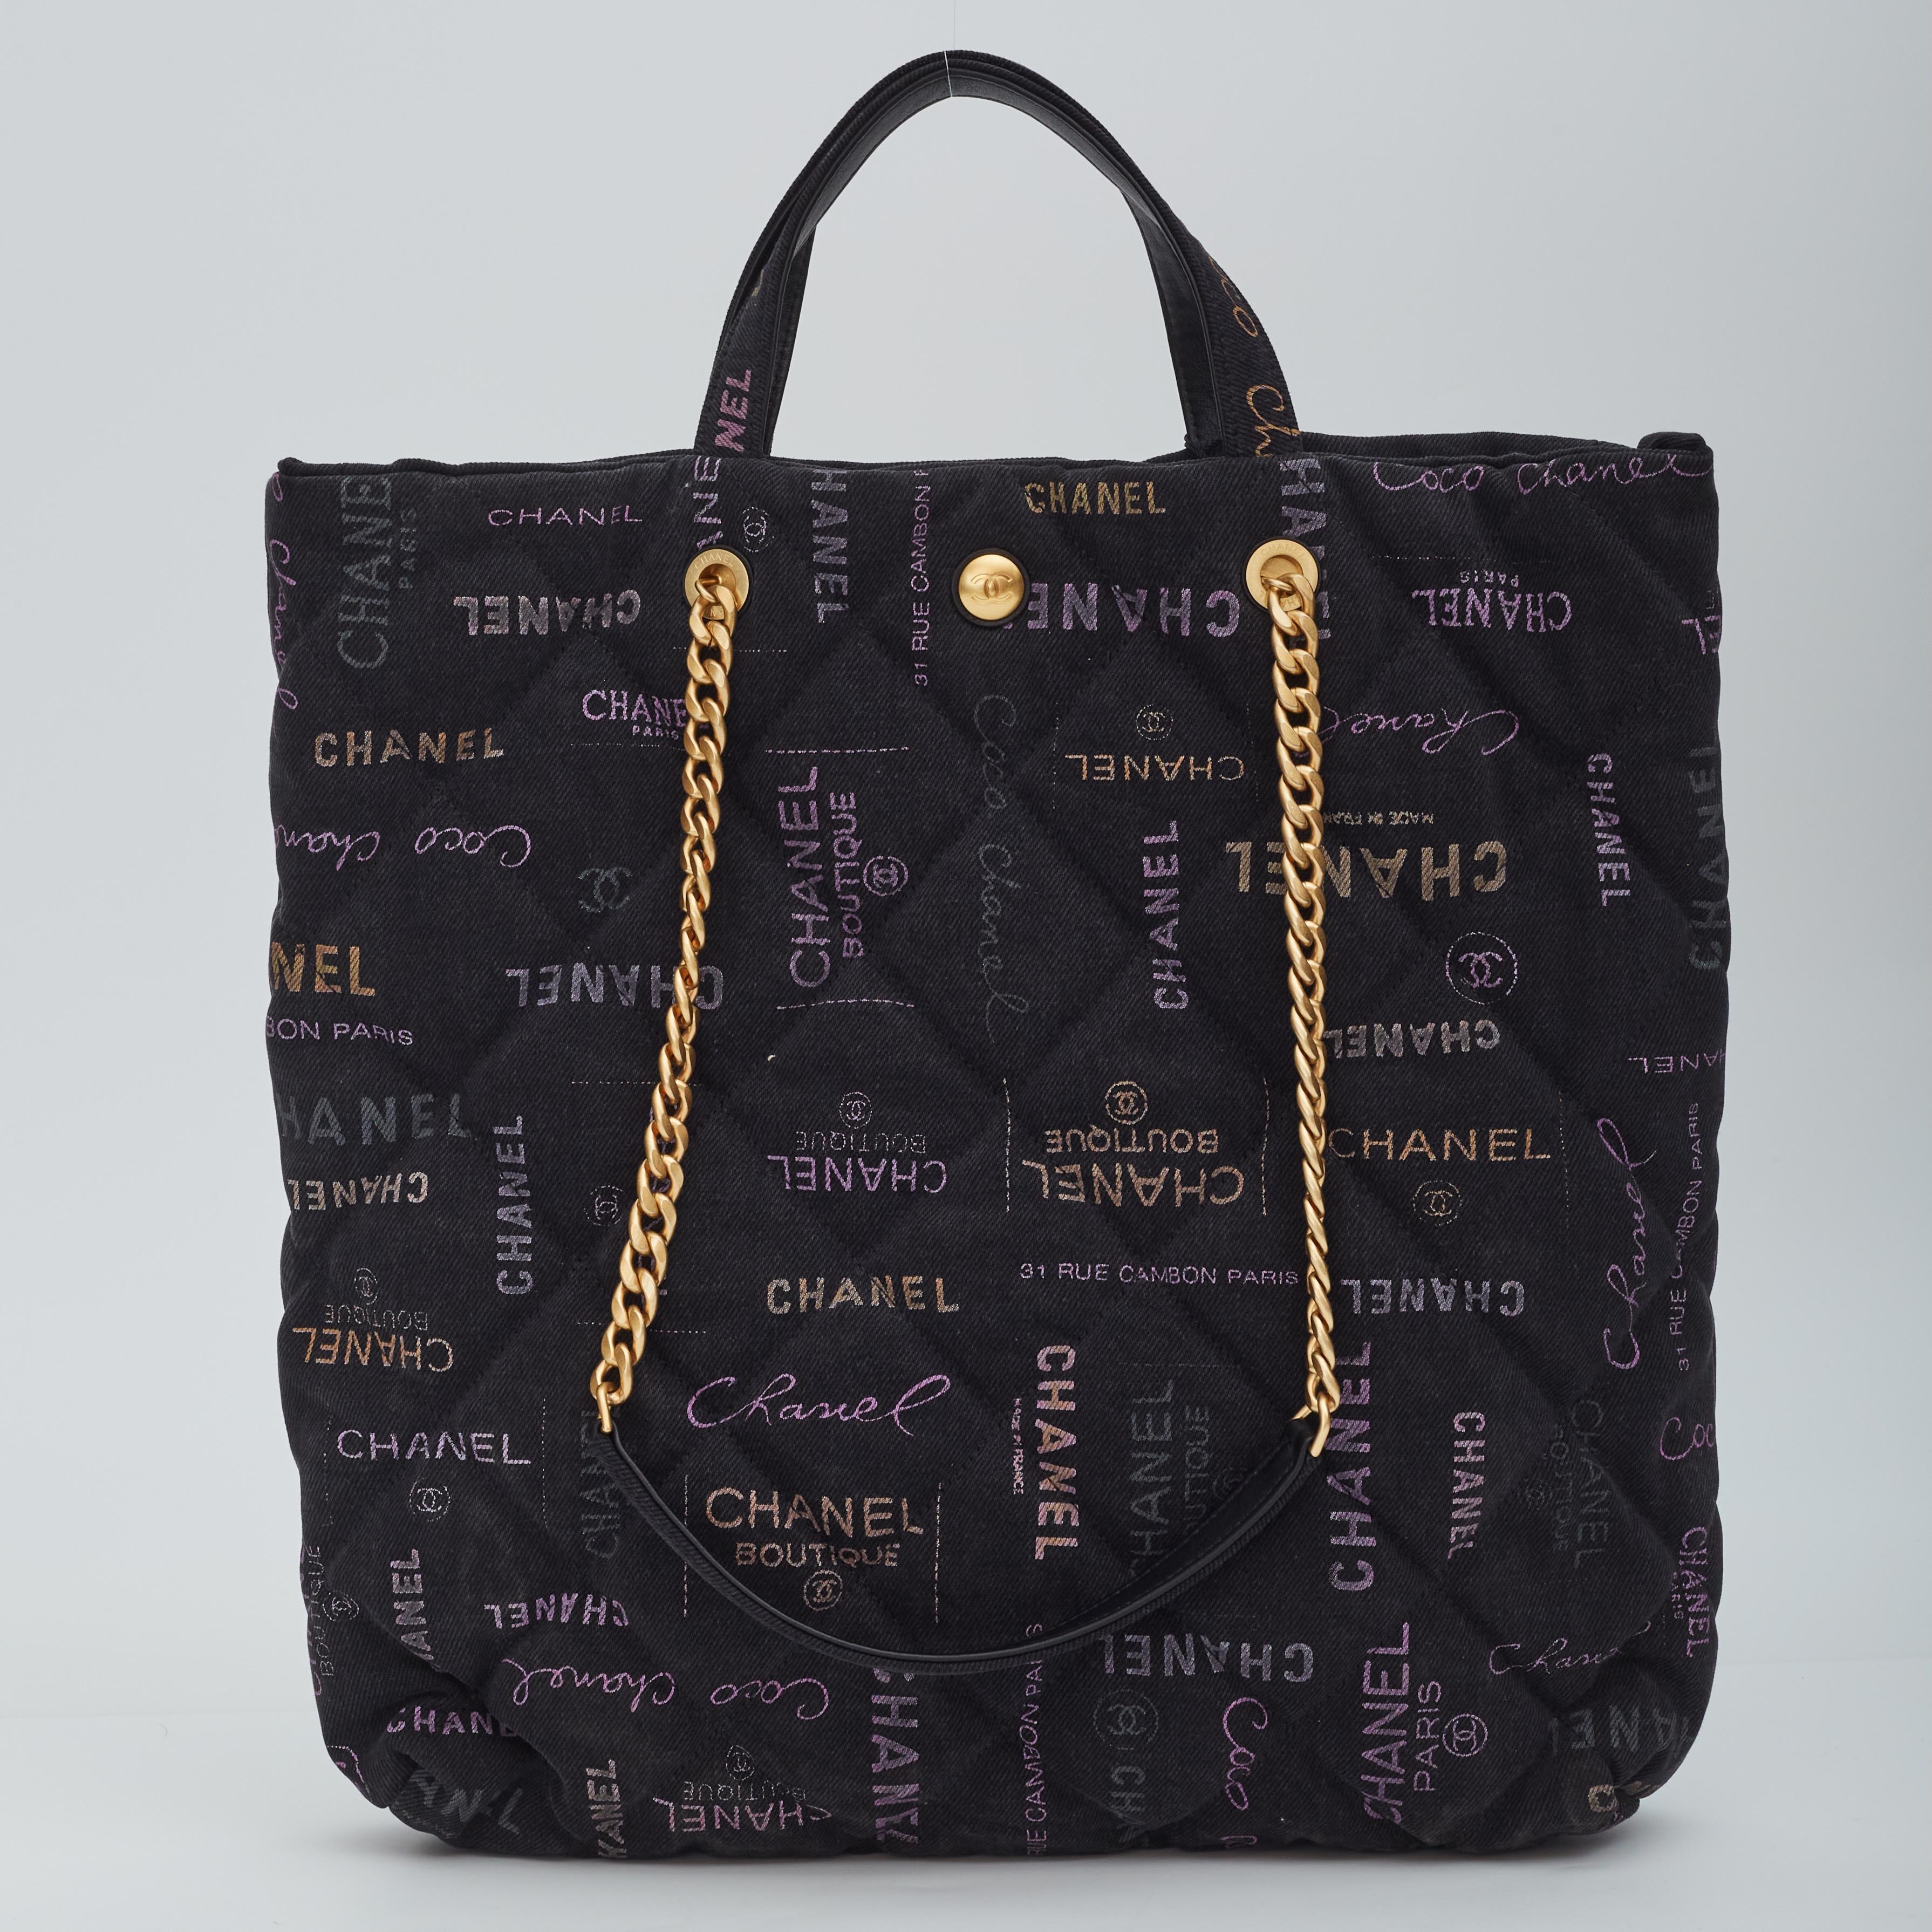 New Chanel Handbags 2021 - 17 For Sale on 1stDibs  new chanel bag, chanel  2021 bag collection, chanel handbag 2021